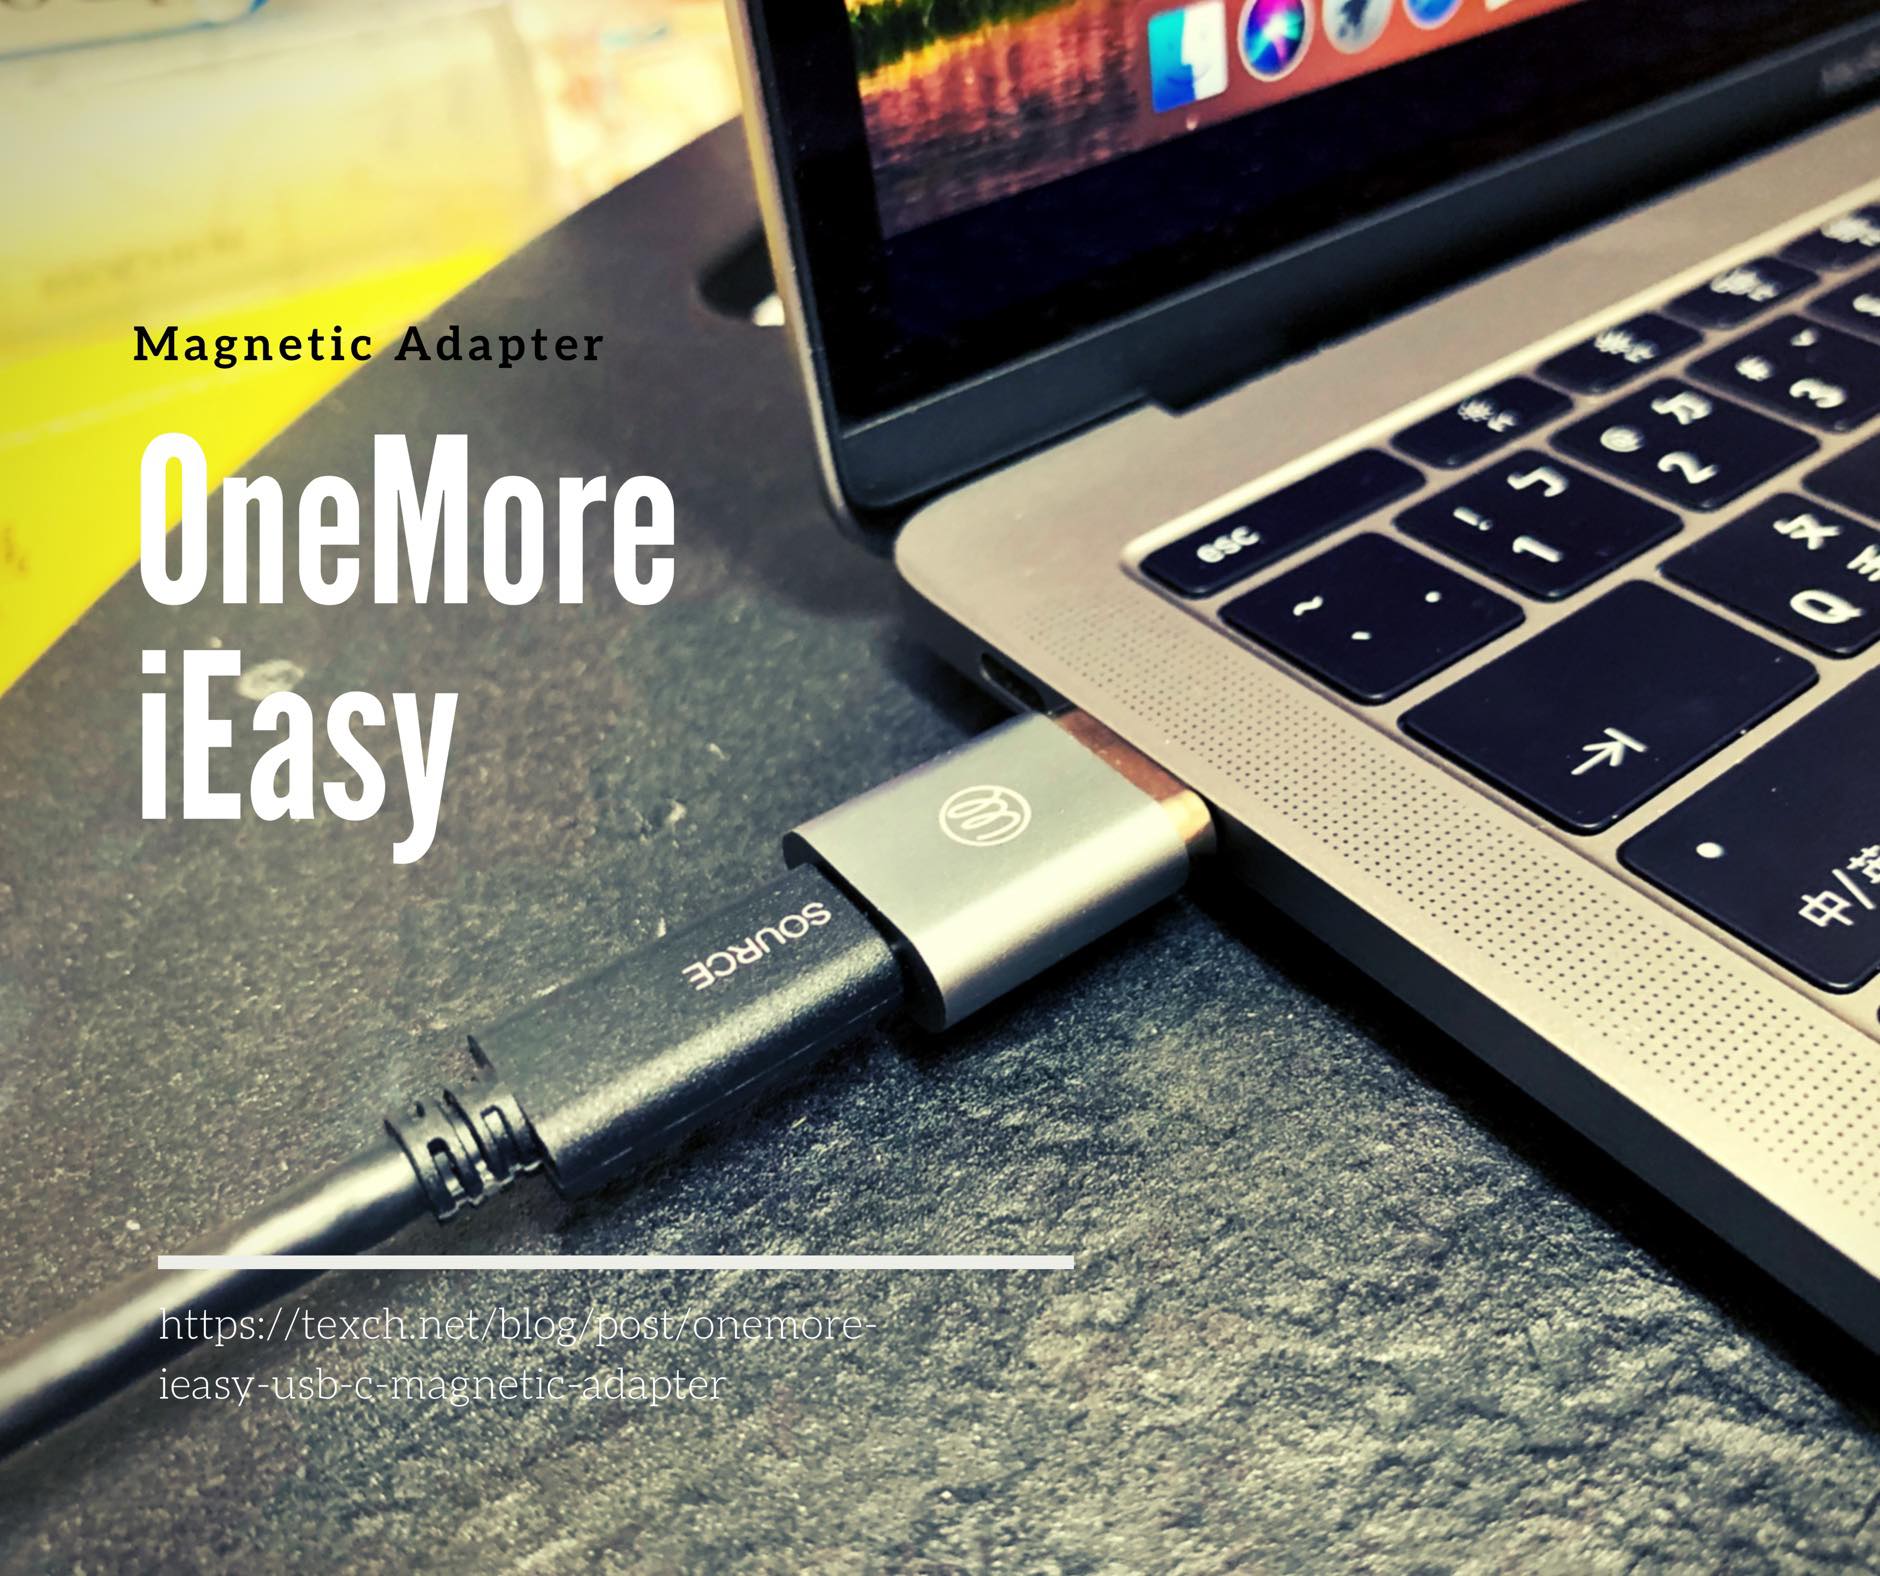 OneMore iEasy USB-C 磁吸轉接頭 - 熟悉的 MagSafe 正式回歸 - Mac周邊 - 科技生活 - teXch